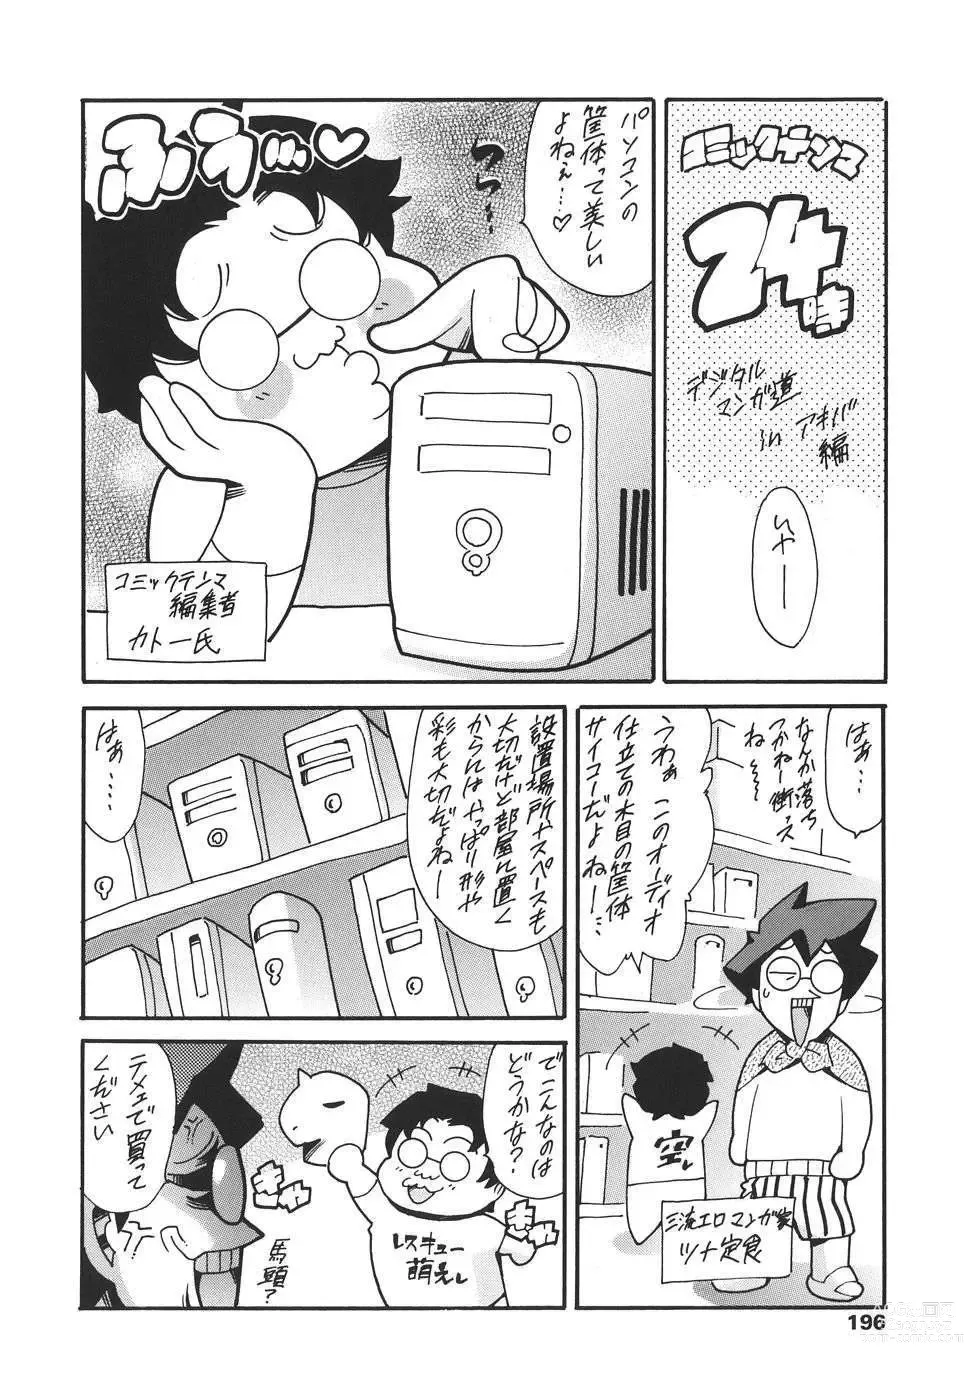 Page 196 of manga Katei no Jijou - Familys circumstances